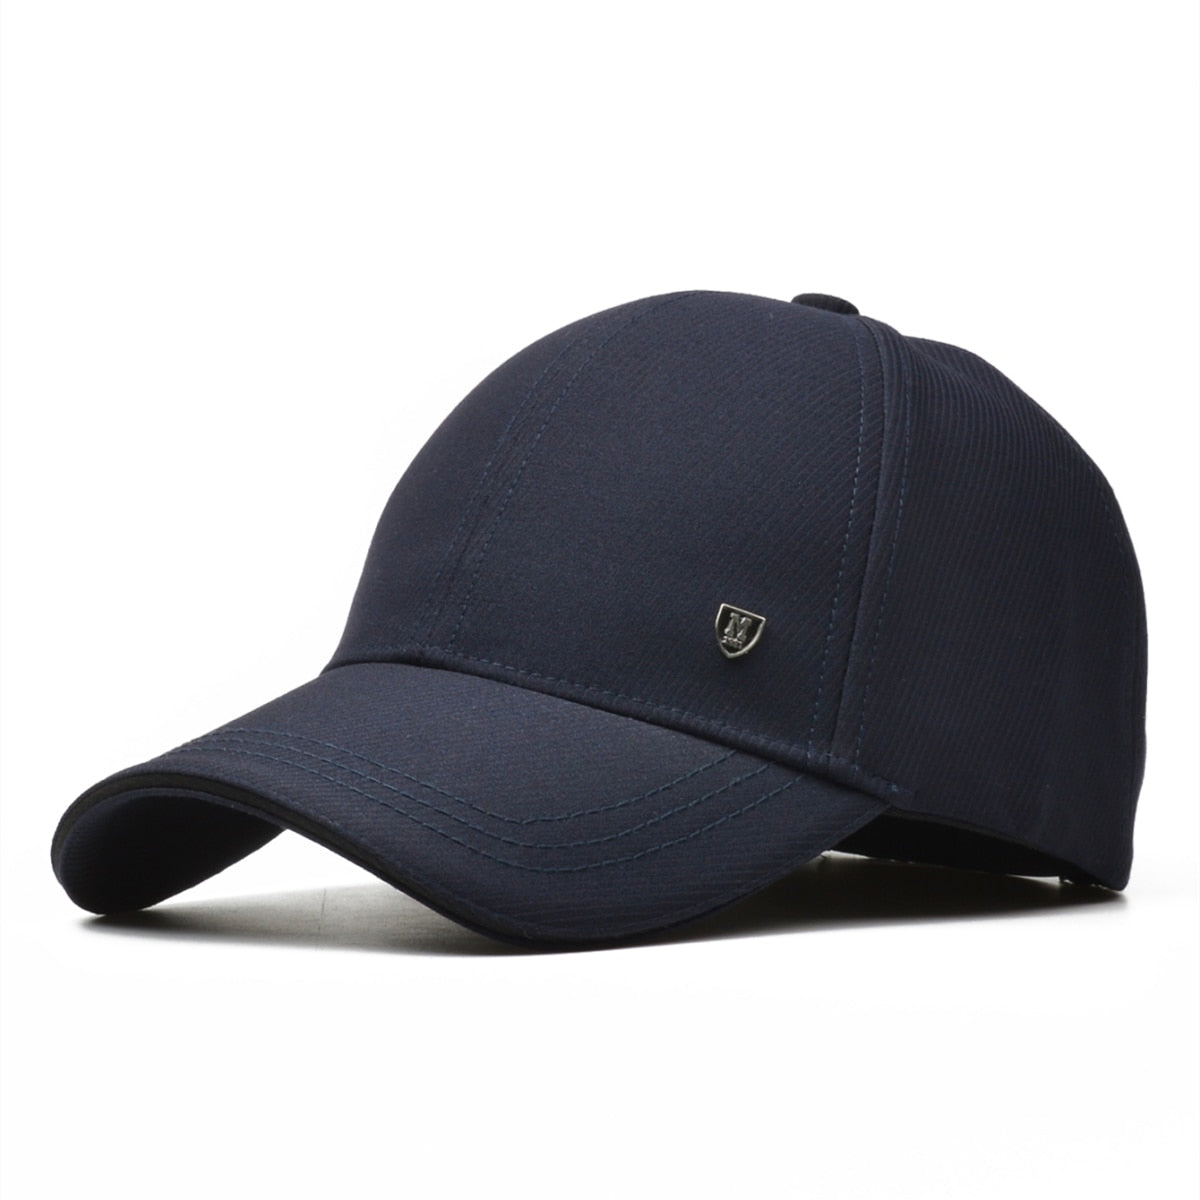 Fashion Men's Caps Cotton Summer Baseball Cap Male Casual Solid Snapback Classic Trucker Hat Adjustable Golf Hats Bone